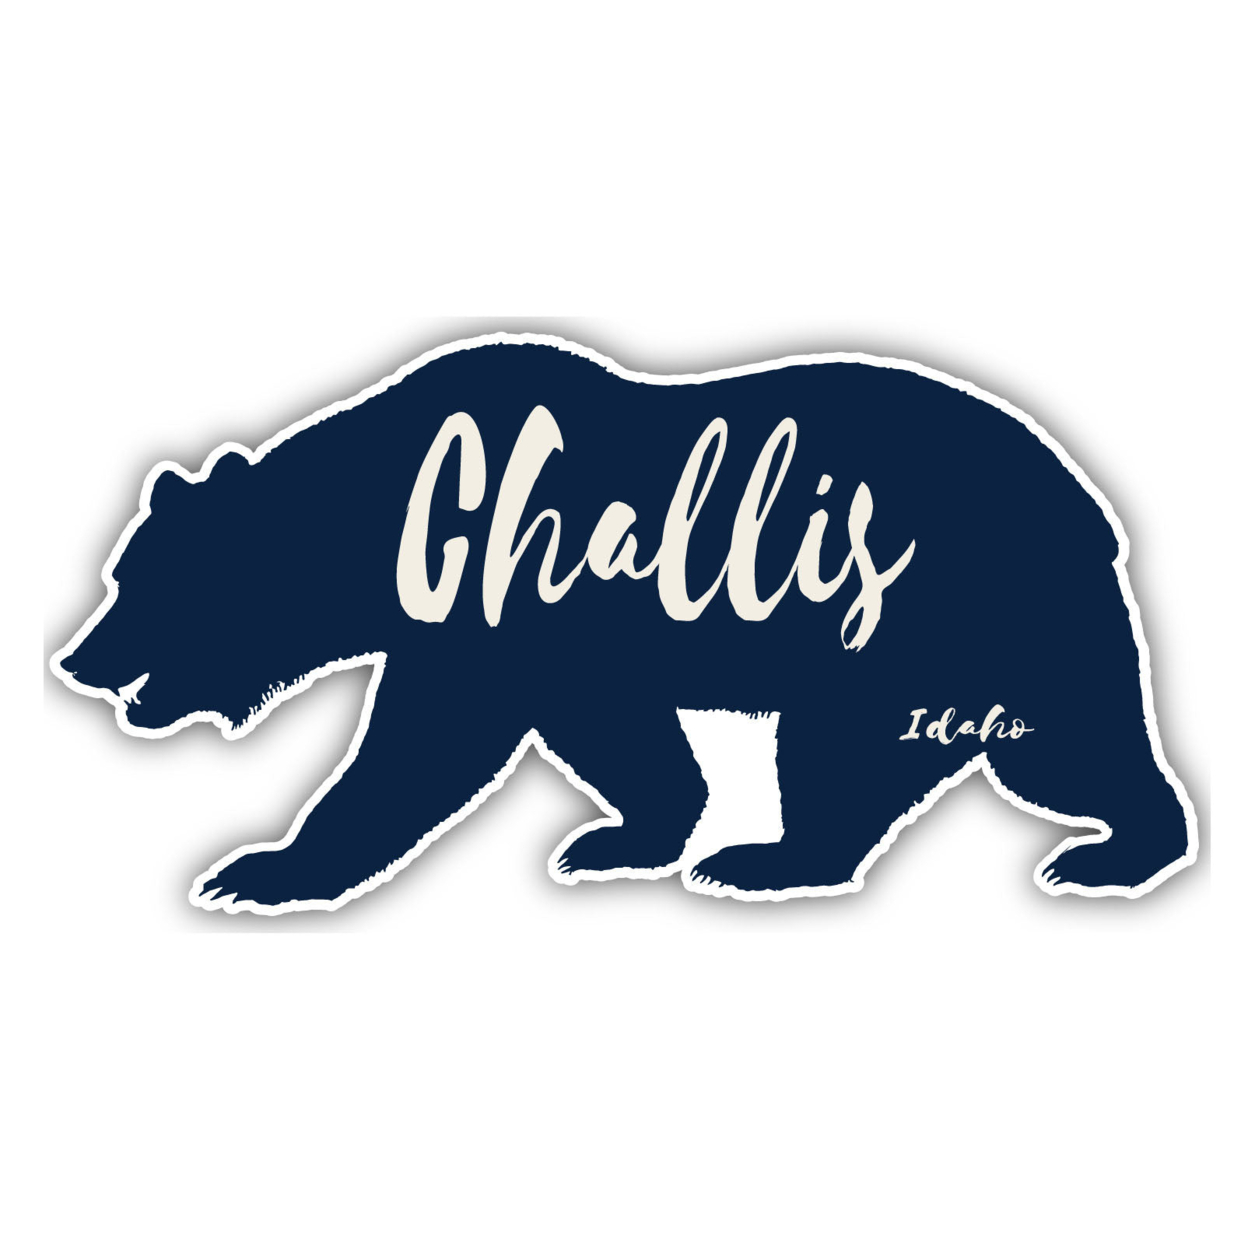 Challis Idaho Souvenir Decorative Stickers (Choose Theme And Size) - 4-Pack, 12-Inch, Adventures Awaits